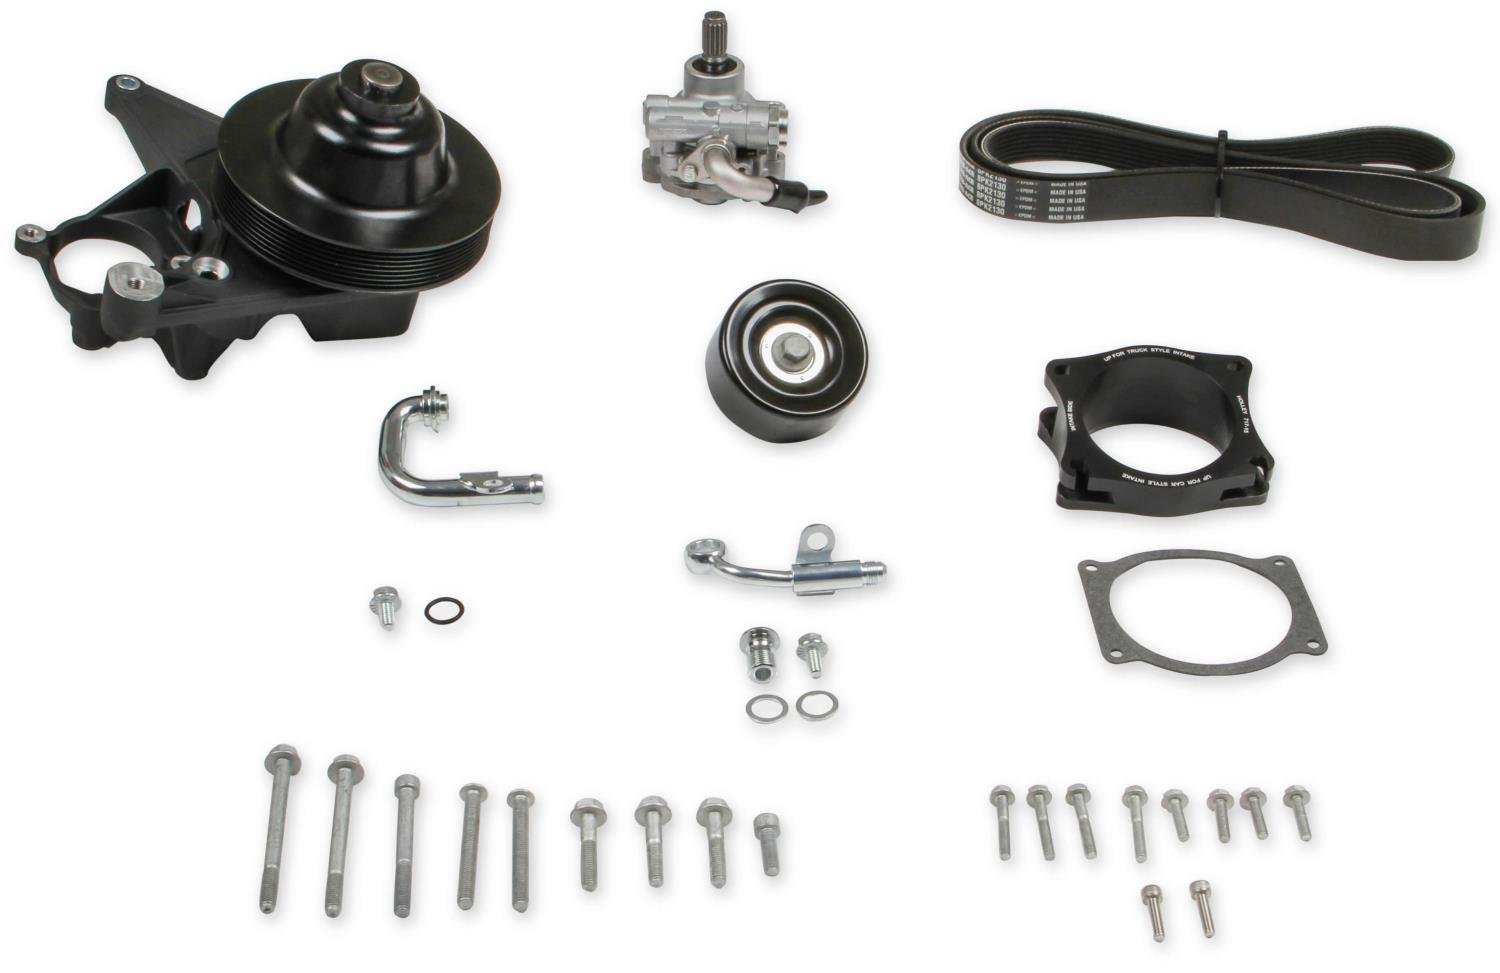 Retro-Fit Hydraulic Power Steering Kit for GM Gen V LT5